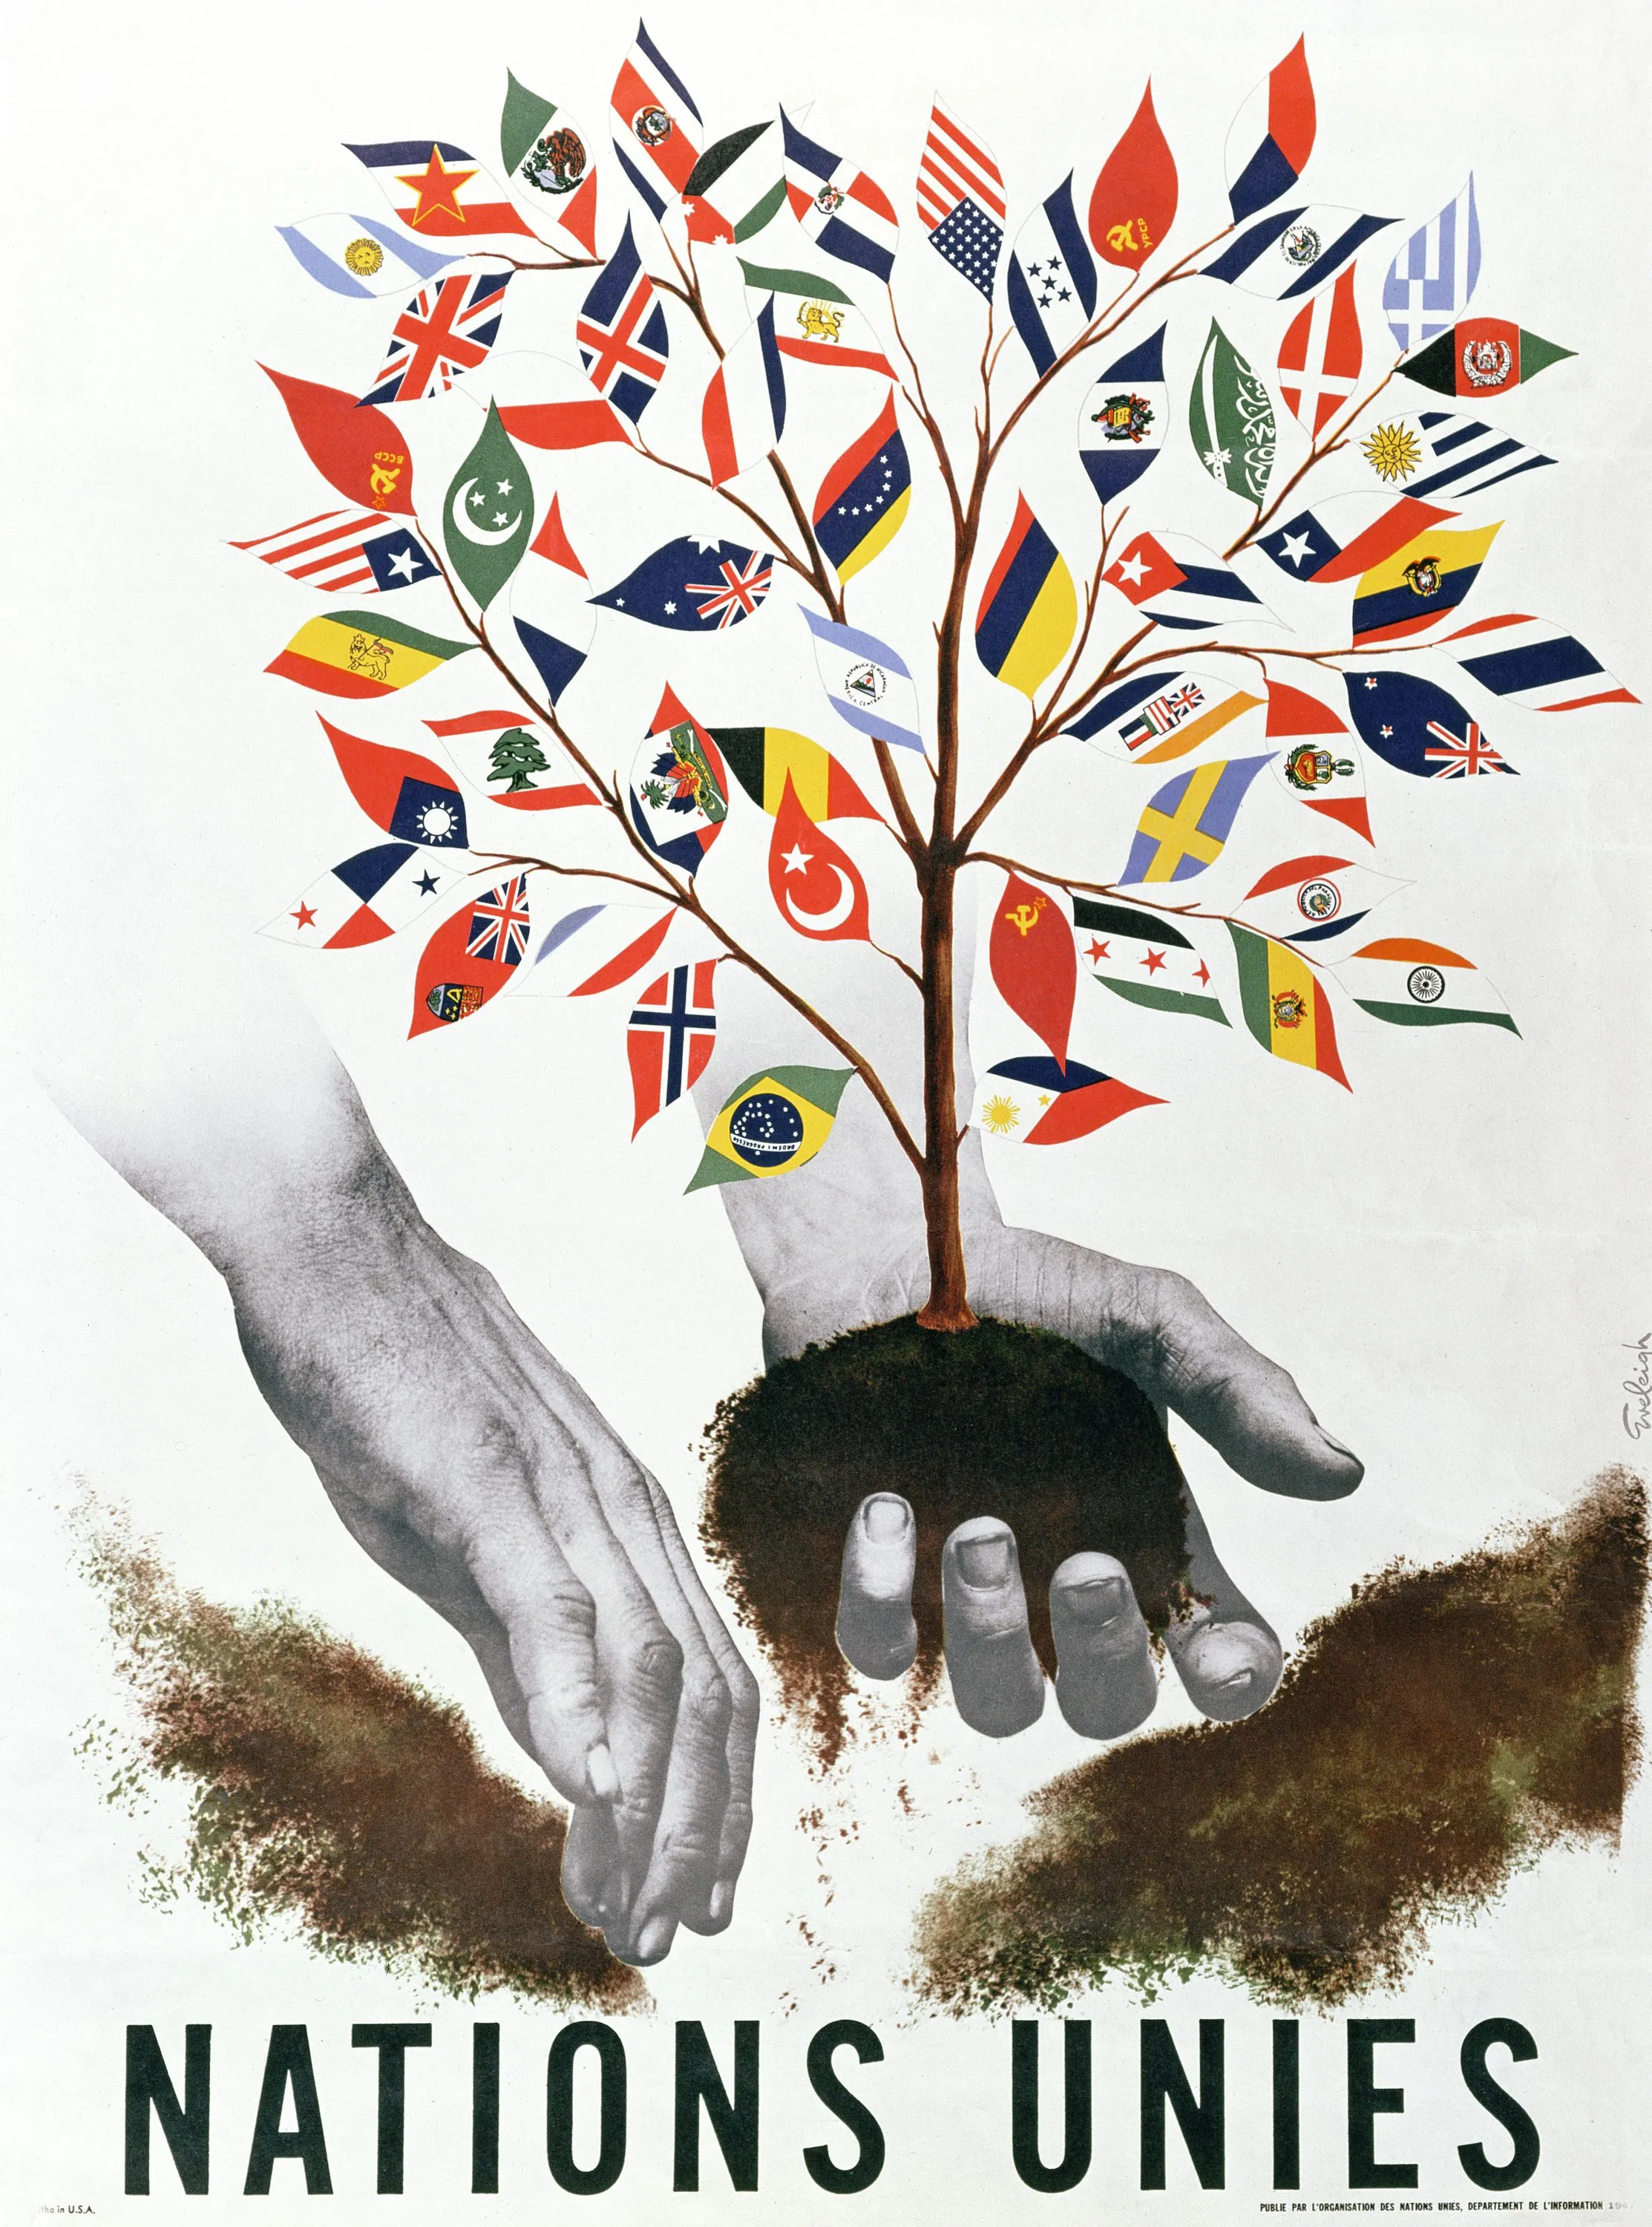 L'ONU égalité, liberté, croissance. Henry Eveleigh, affiche, 1947